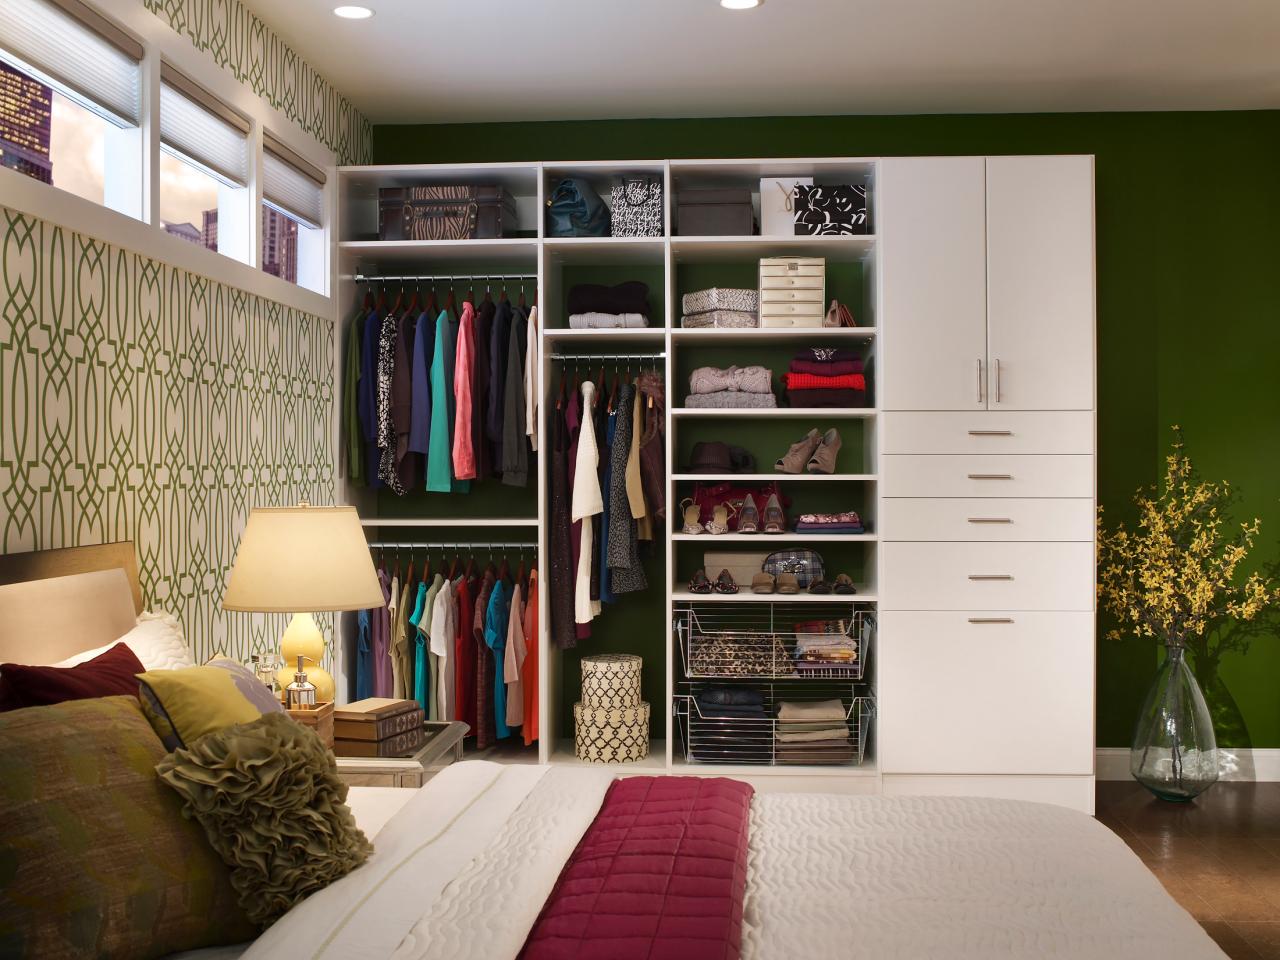 5 Steps To Organizing Your Closet, Bedroom Closet Shelving